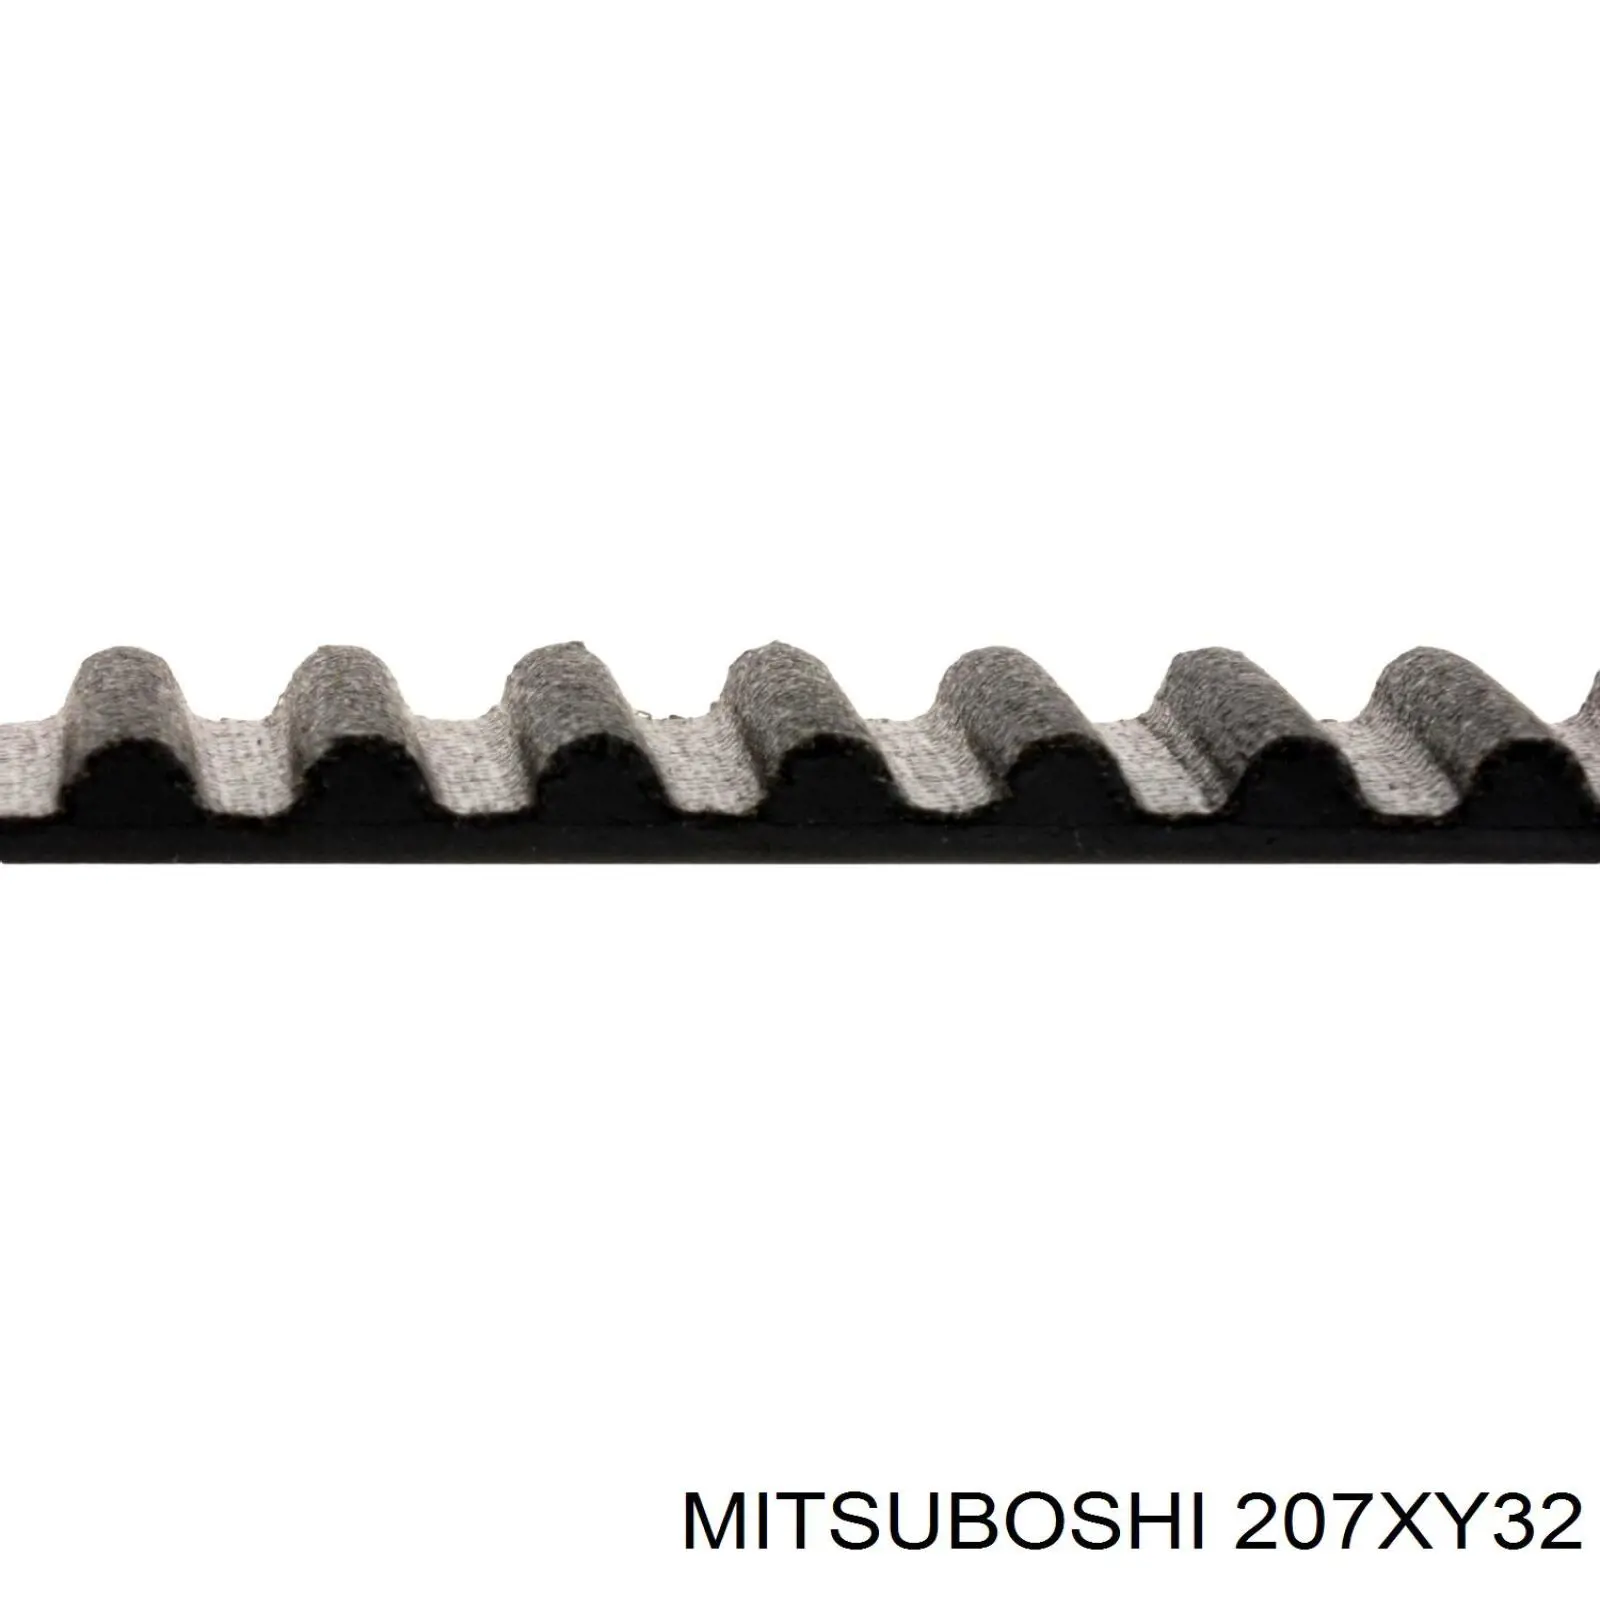 207XY32 Mitsuboshi correa distribucion